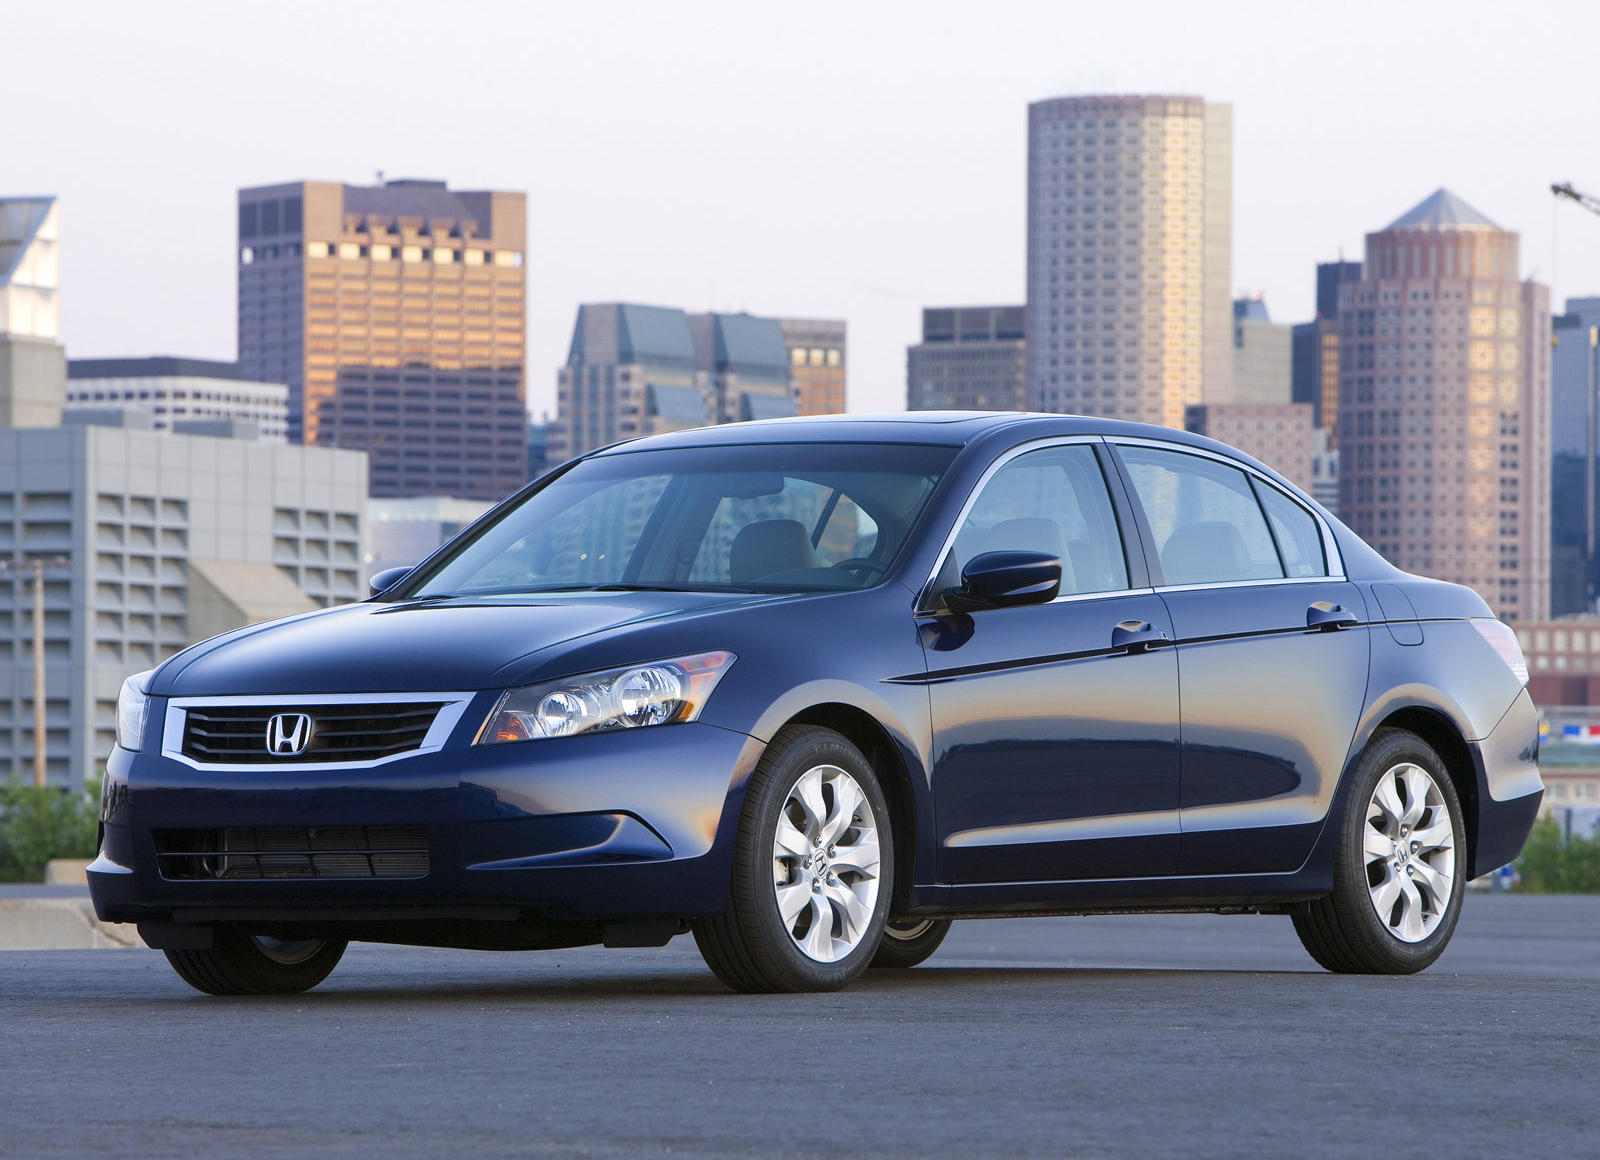 2009 Honda Accord Sedan: Review, Trims, Specs, Price, New Interior ...